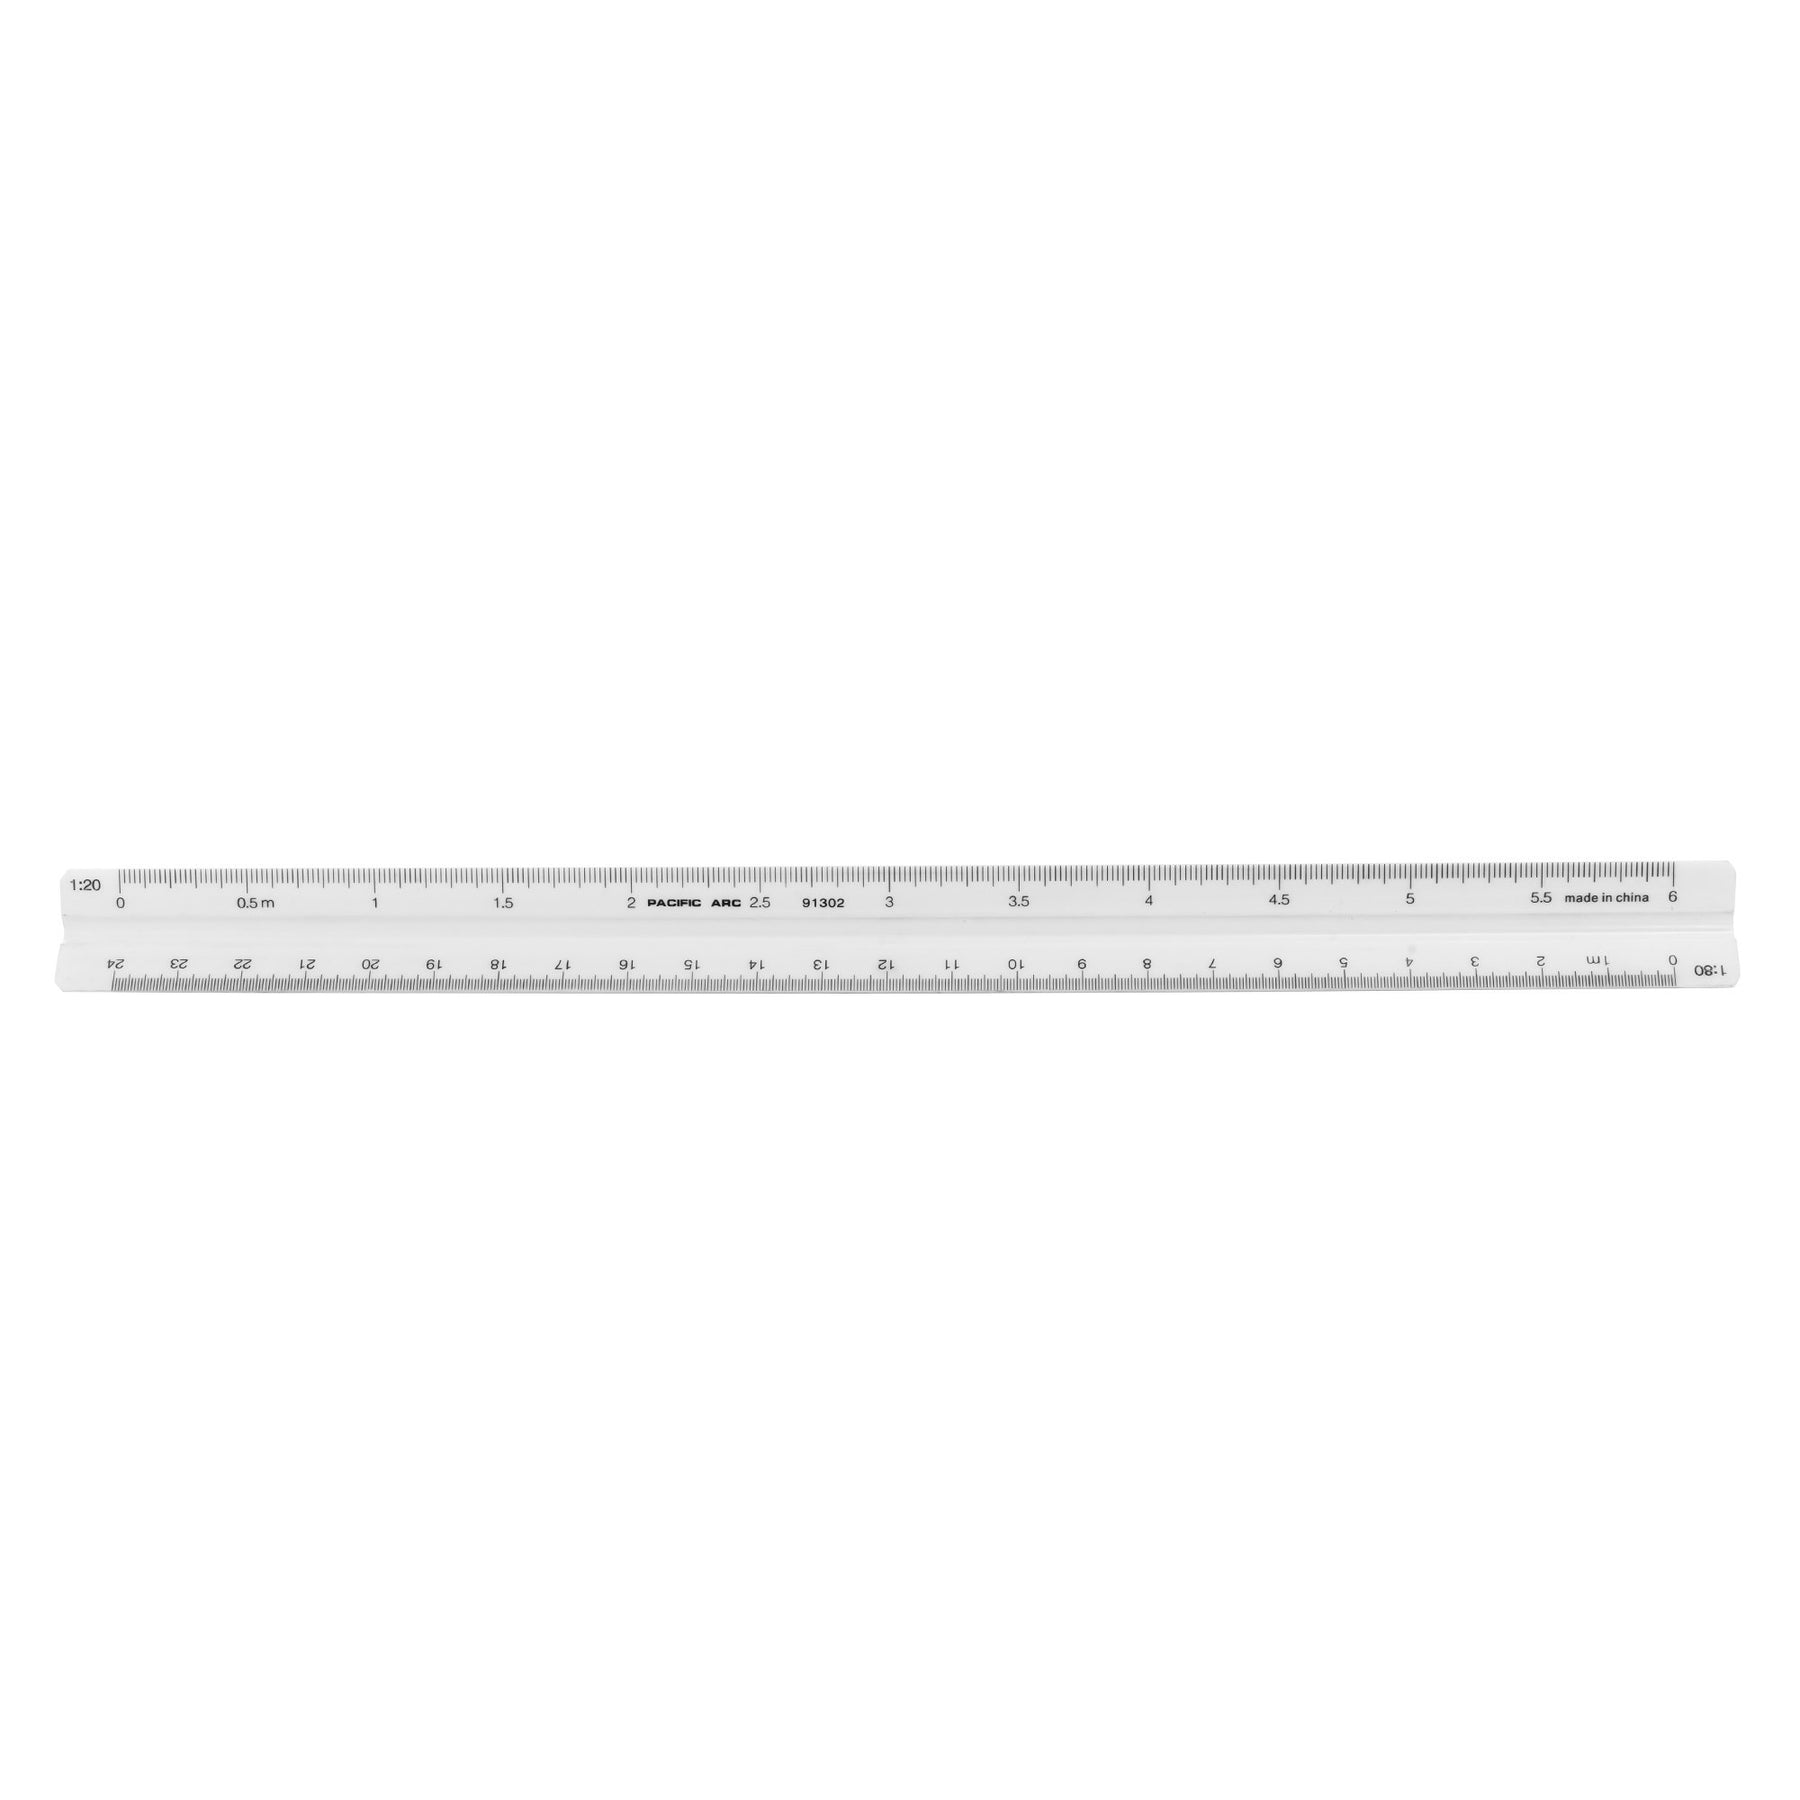 Vary Form Curve 32 cm Plastic Ruler